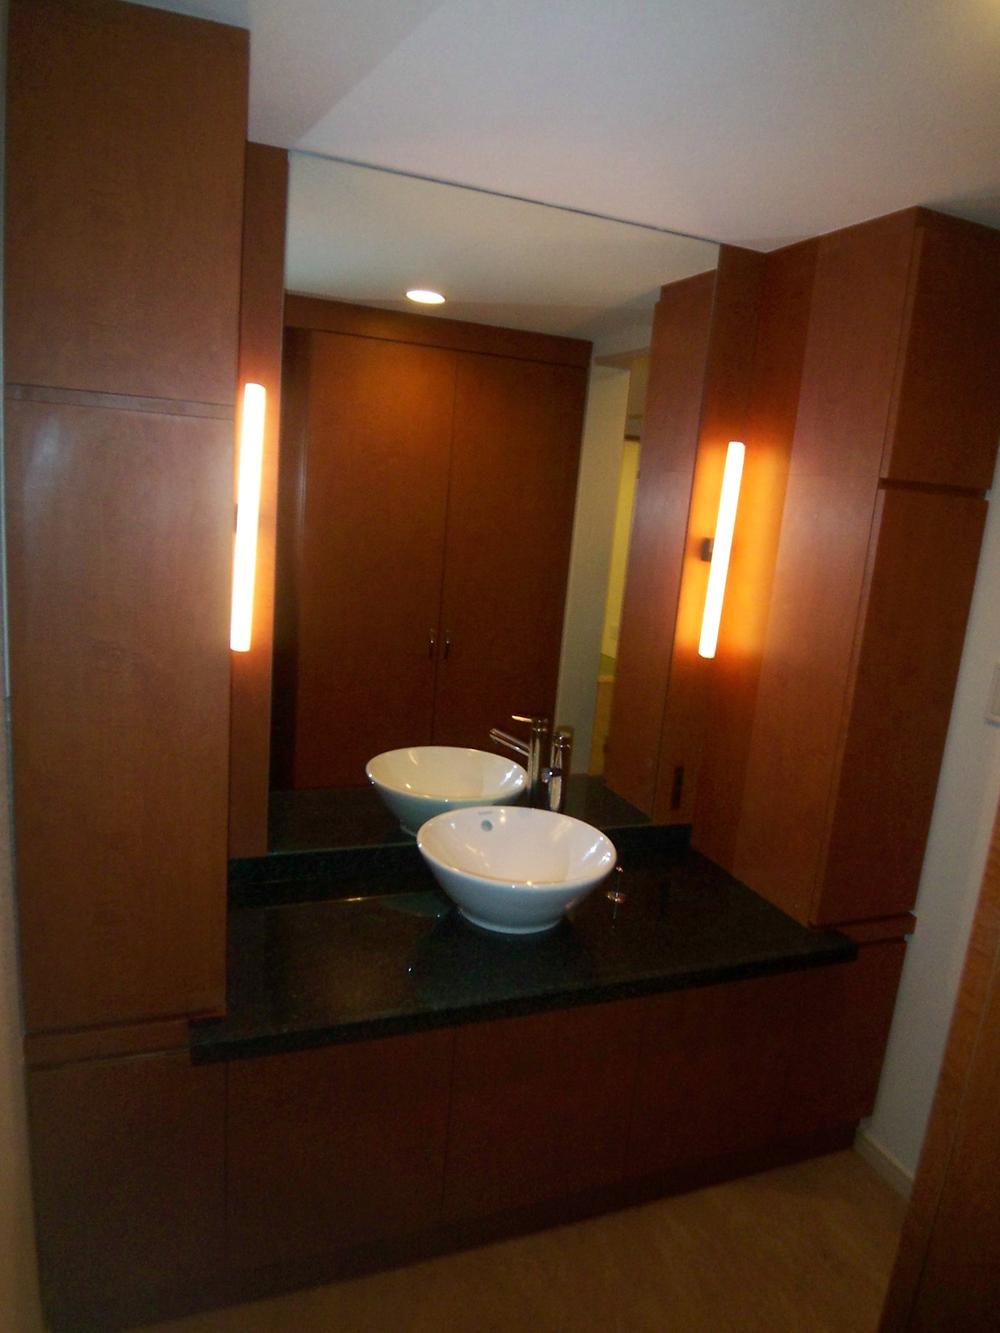 Wash basin, toilet. Indoor (March 2012) shooting